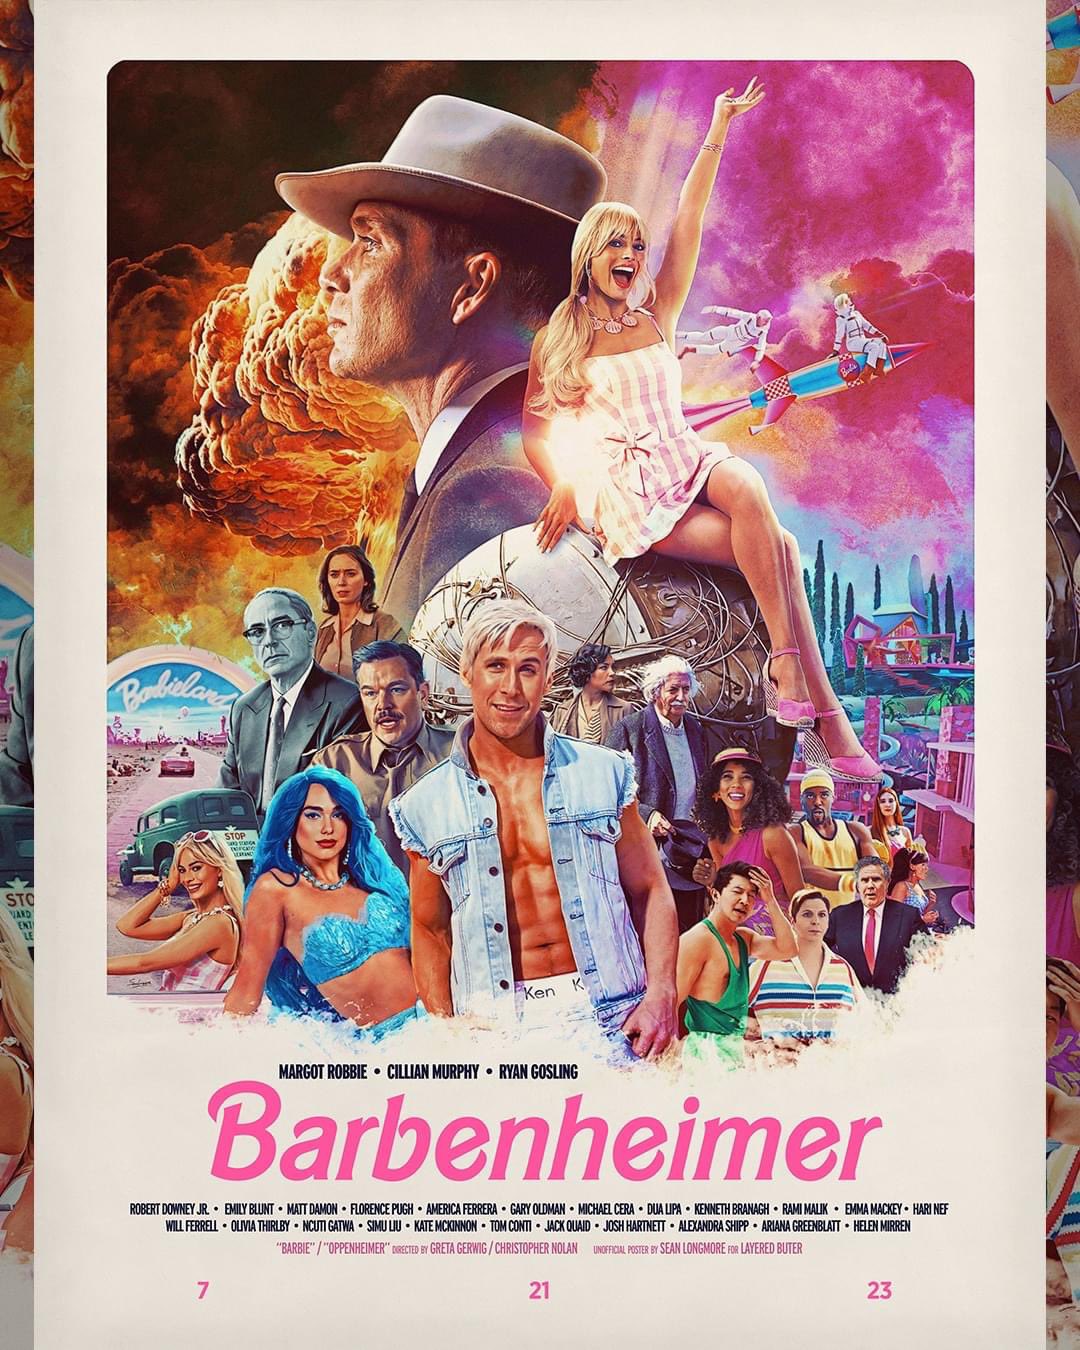 Poster "Barbenheimer" karya warganet dengan akun Twitter @ThatTallGinger